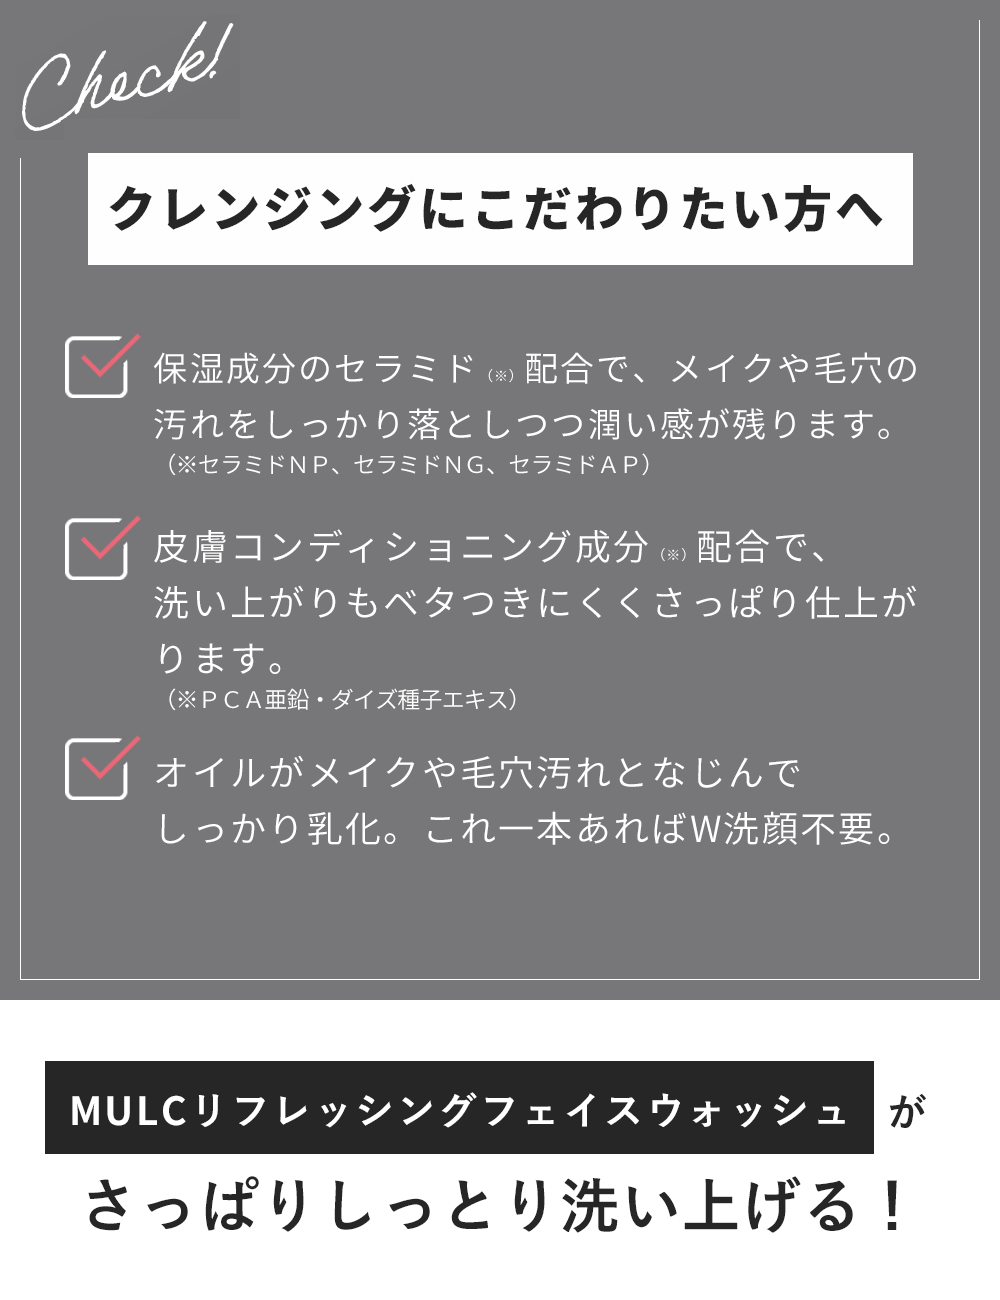 MULC リフレッシングオイルクレンザー - MULCオンラインショップ